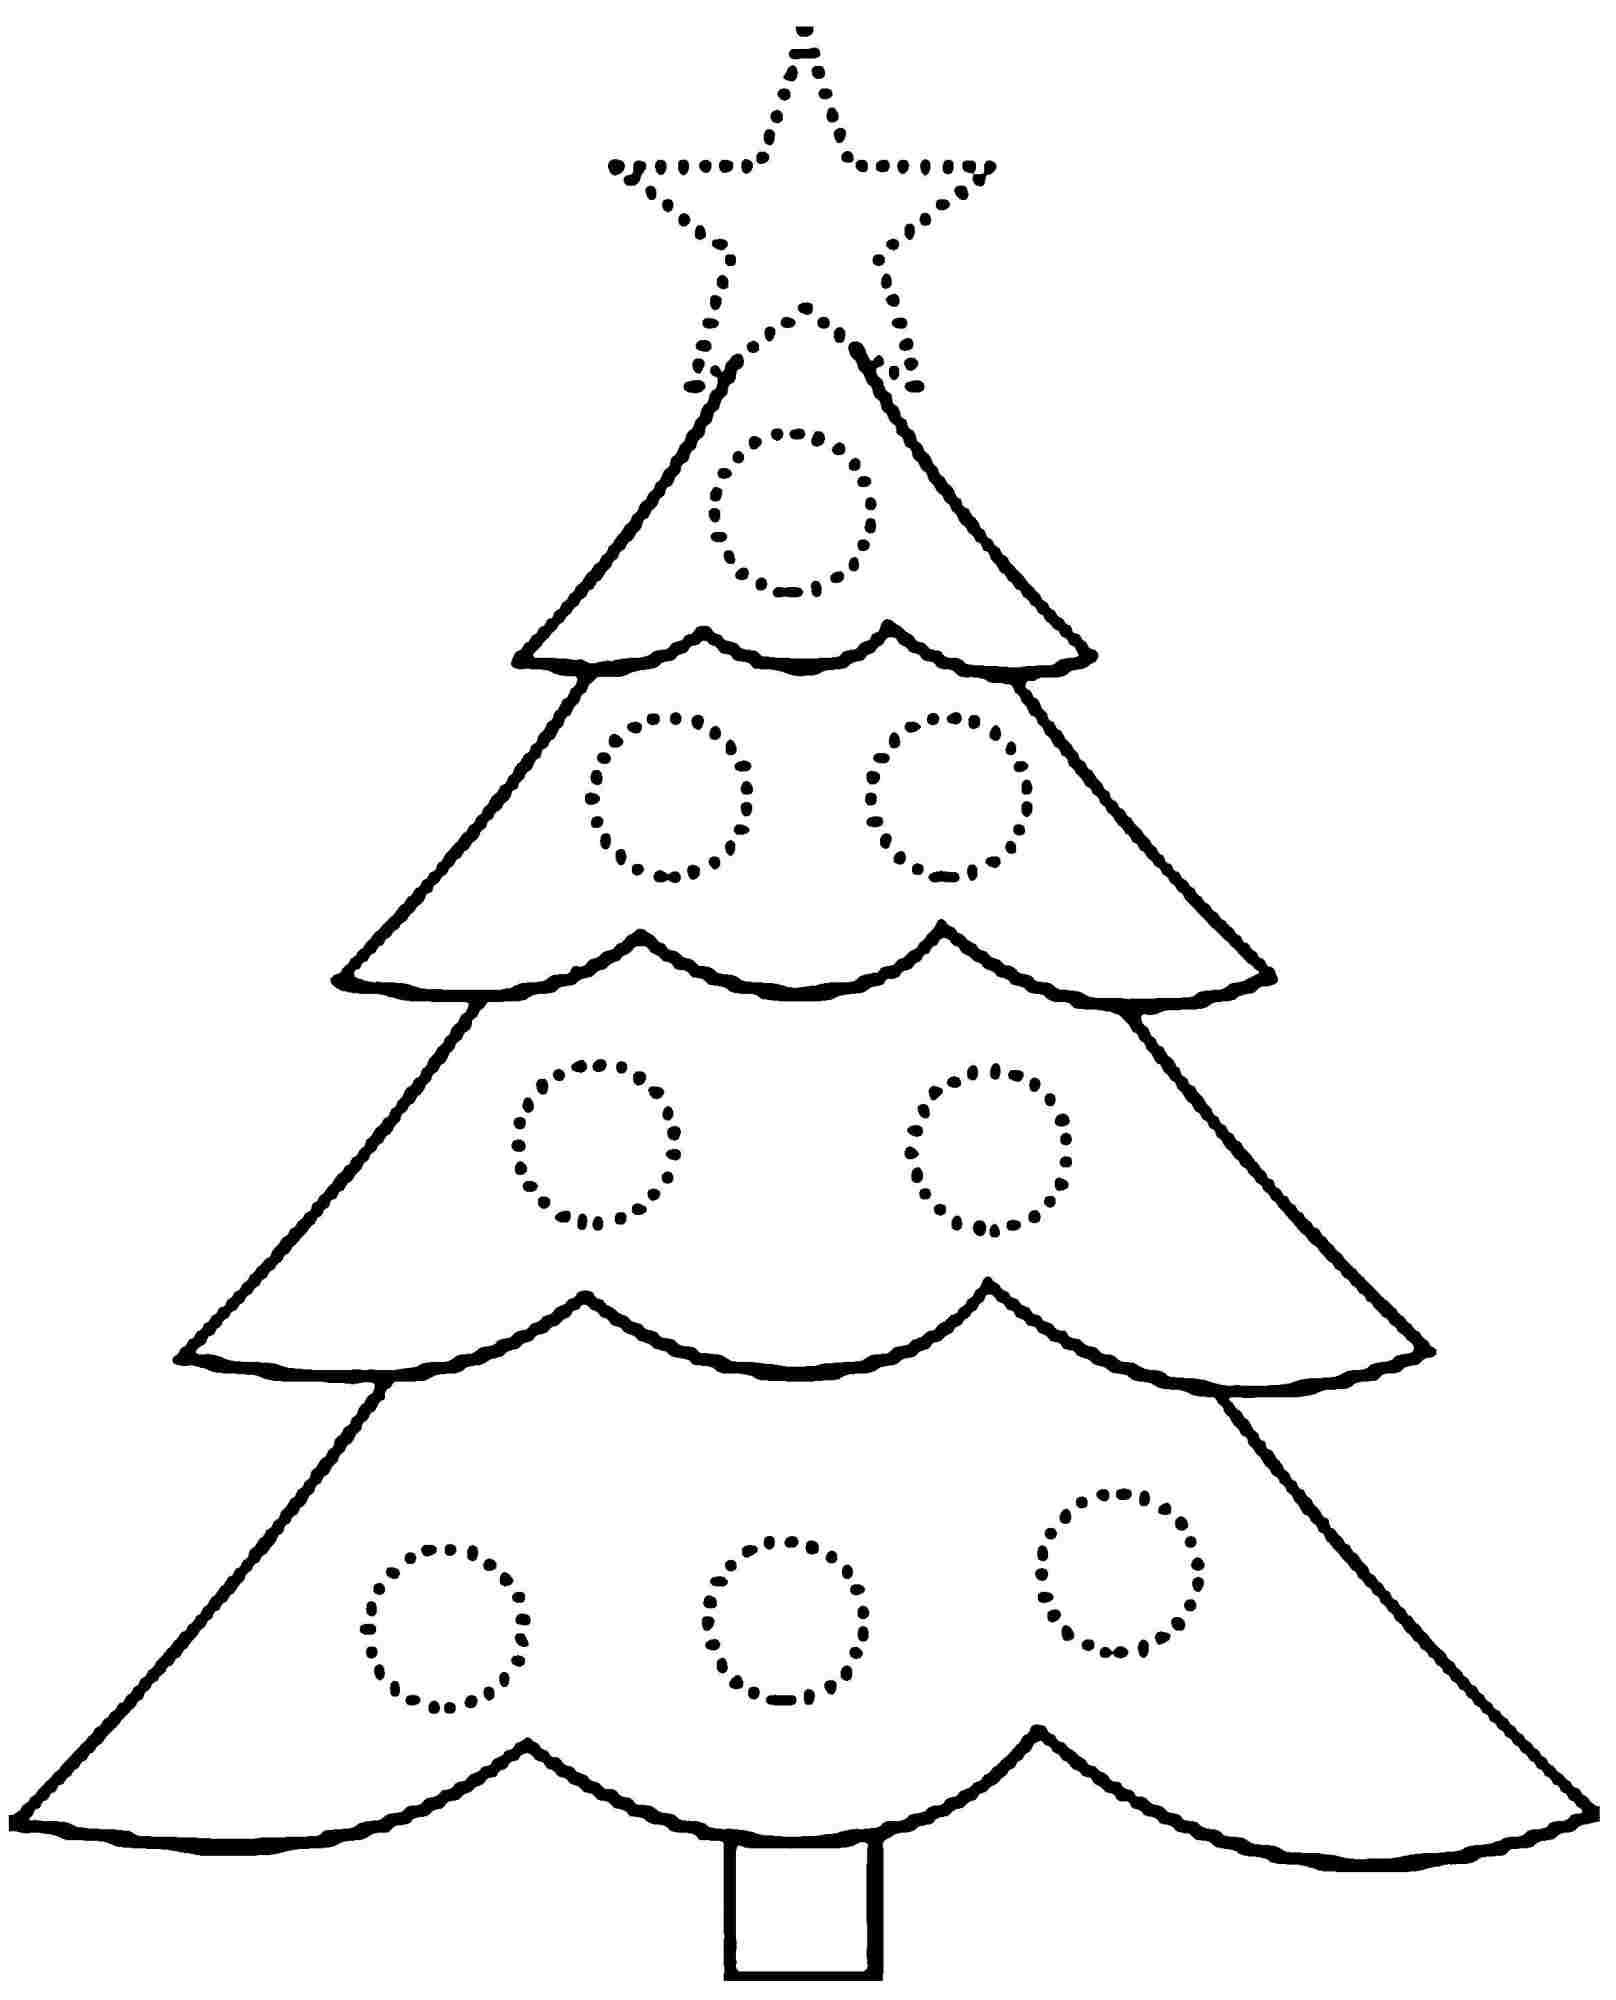 Preschool Christmas Tree Coloring Page | Christmas Tree